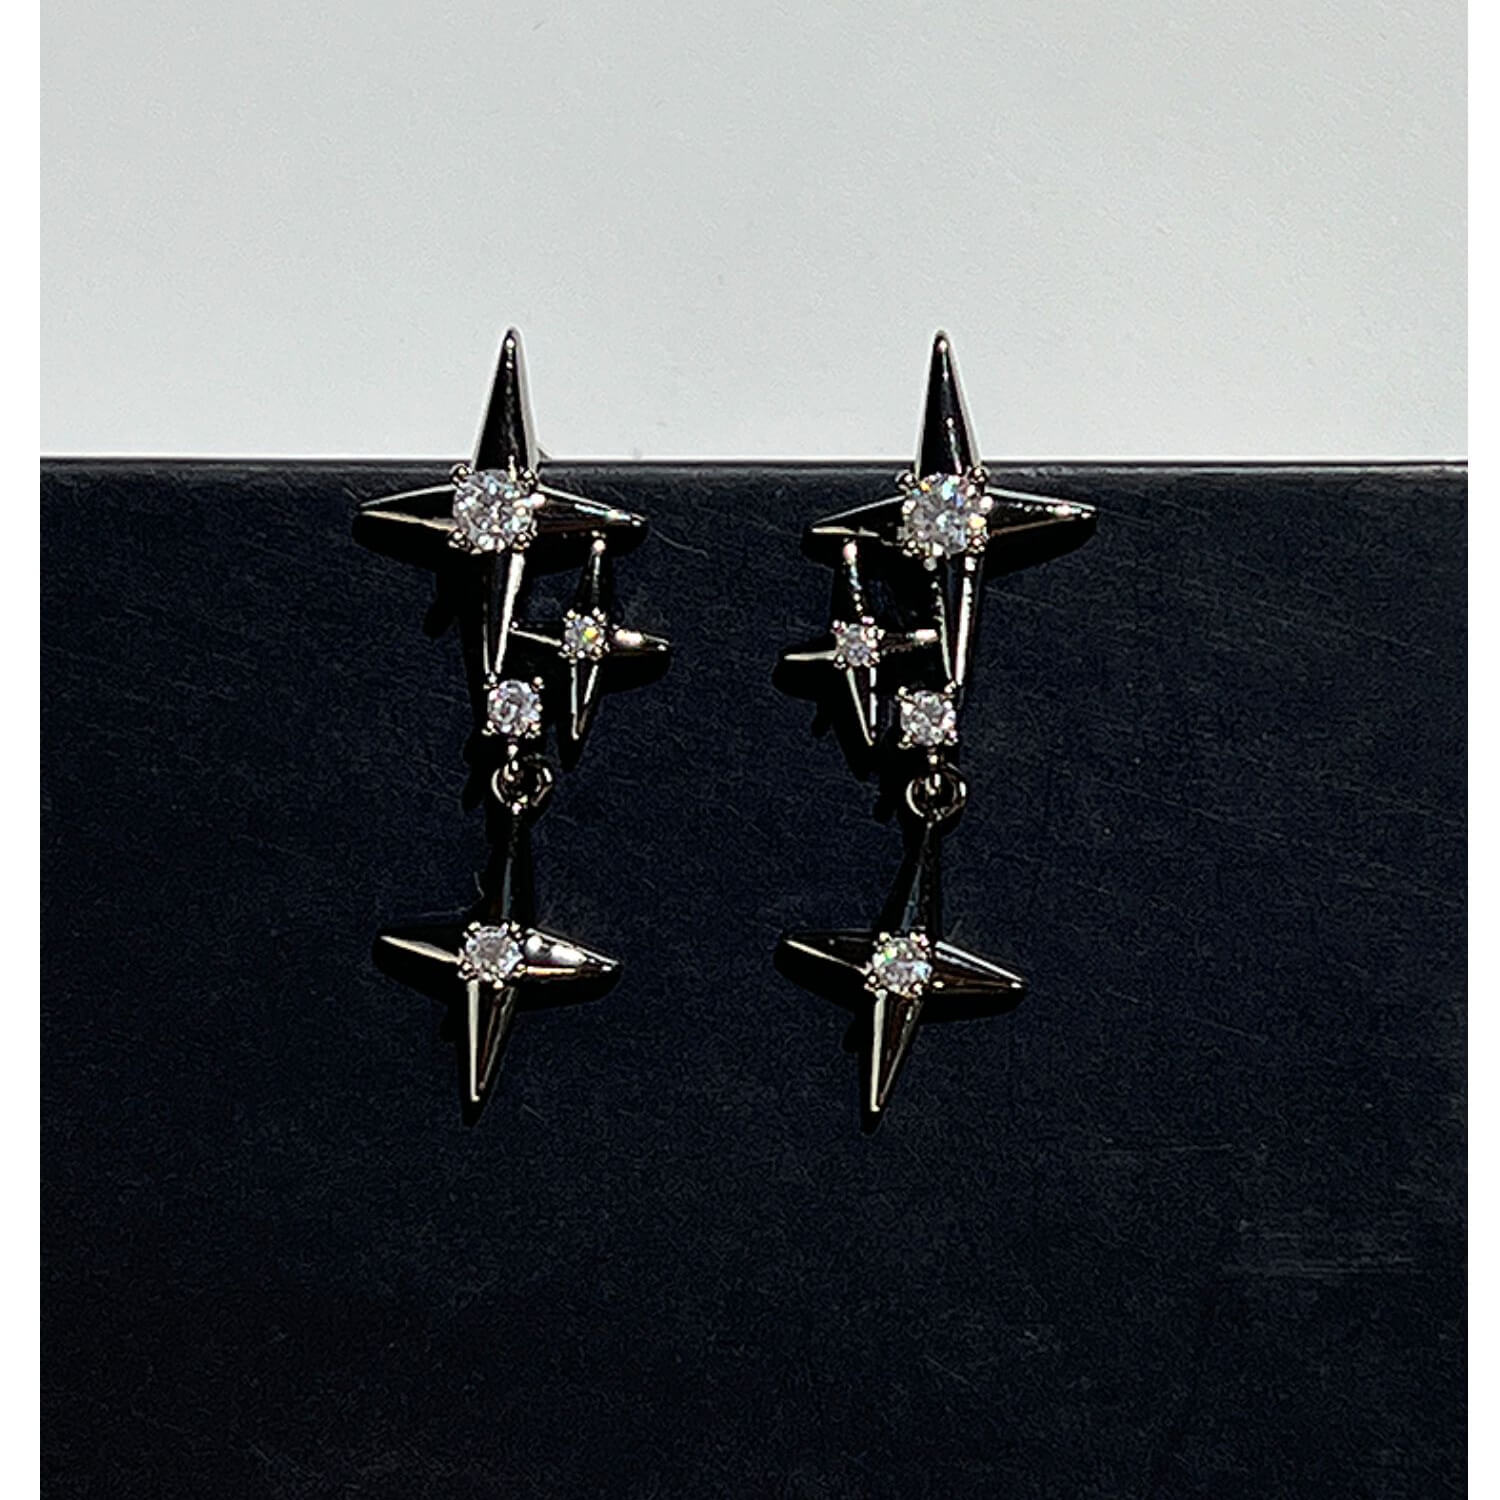 Star Stud Earringsearrings, Jewelrymini star